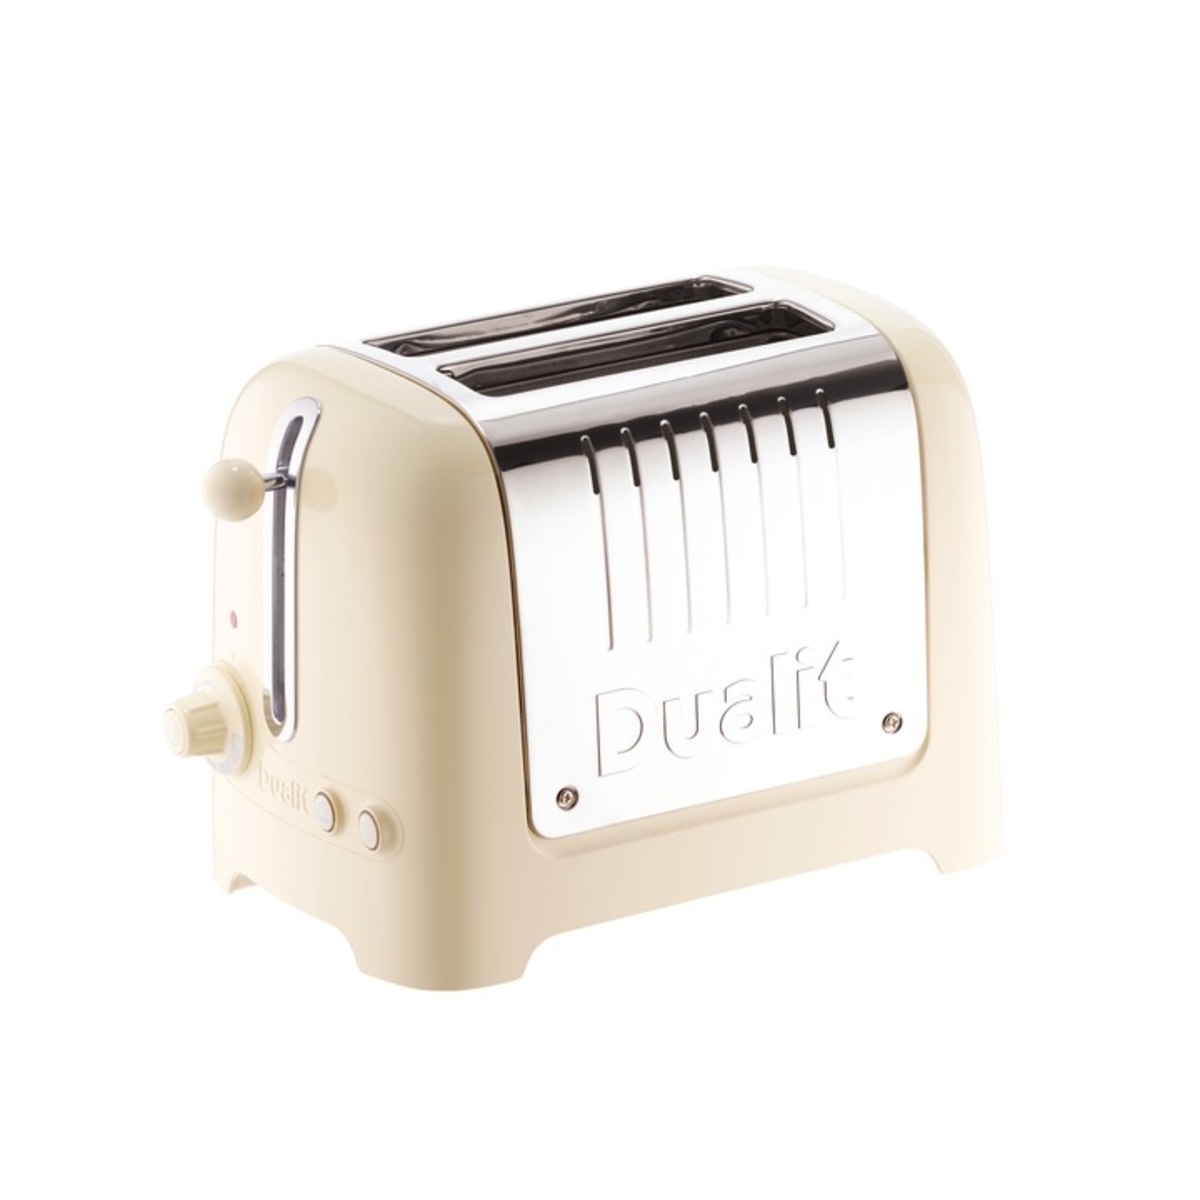 Dualit 26202 2 Slot Lite Toaster, Cream Gloss